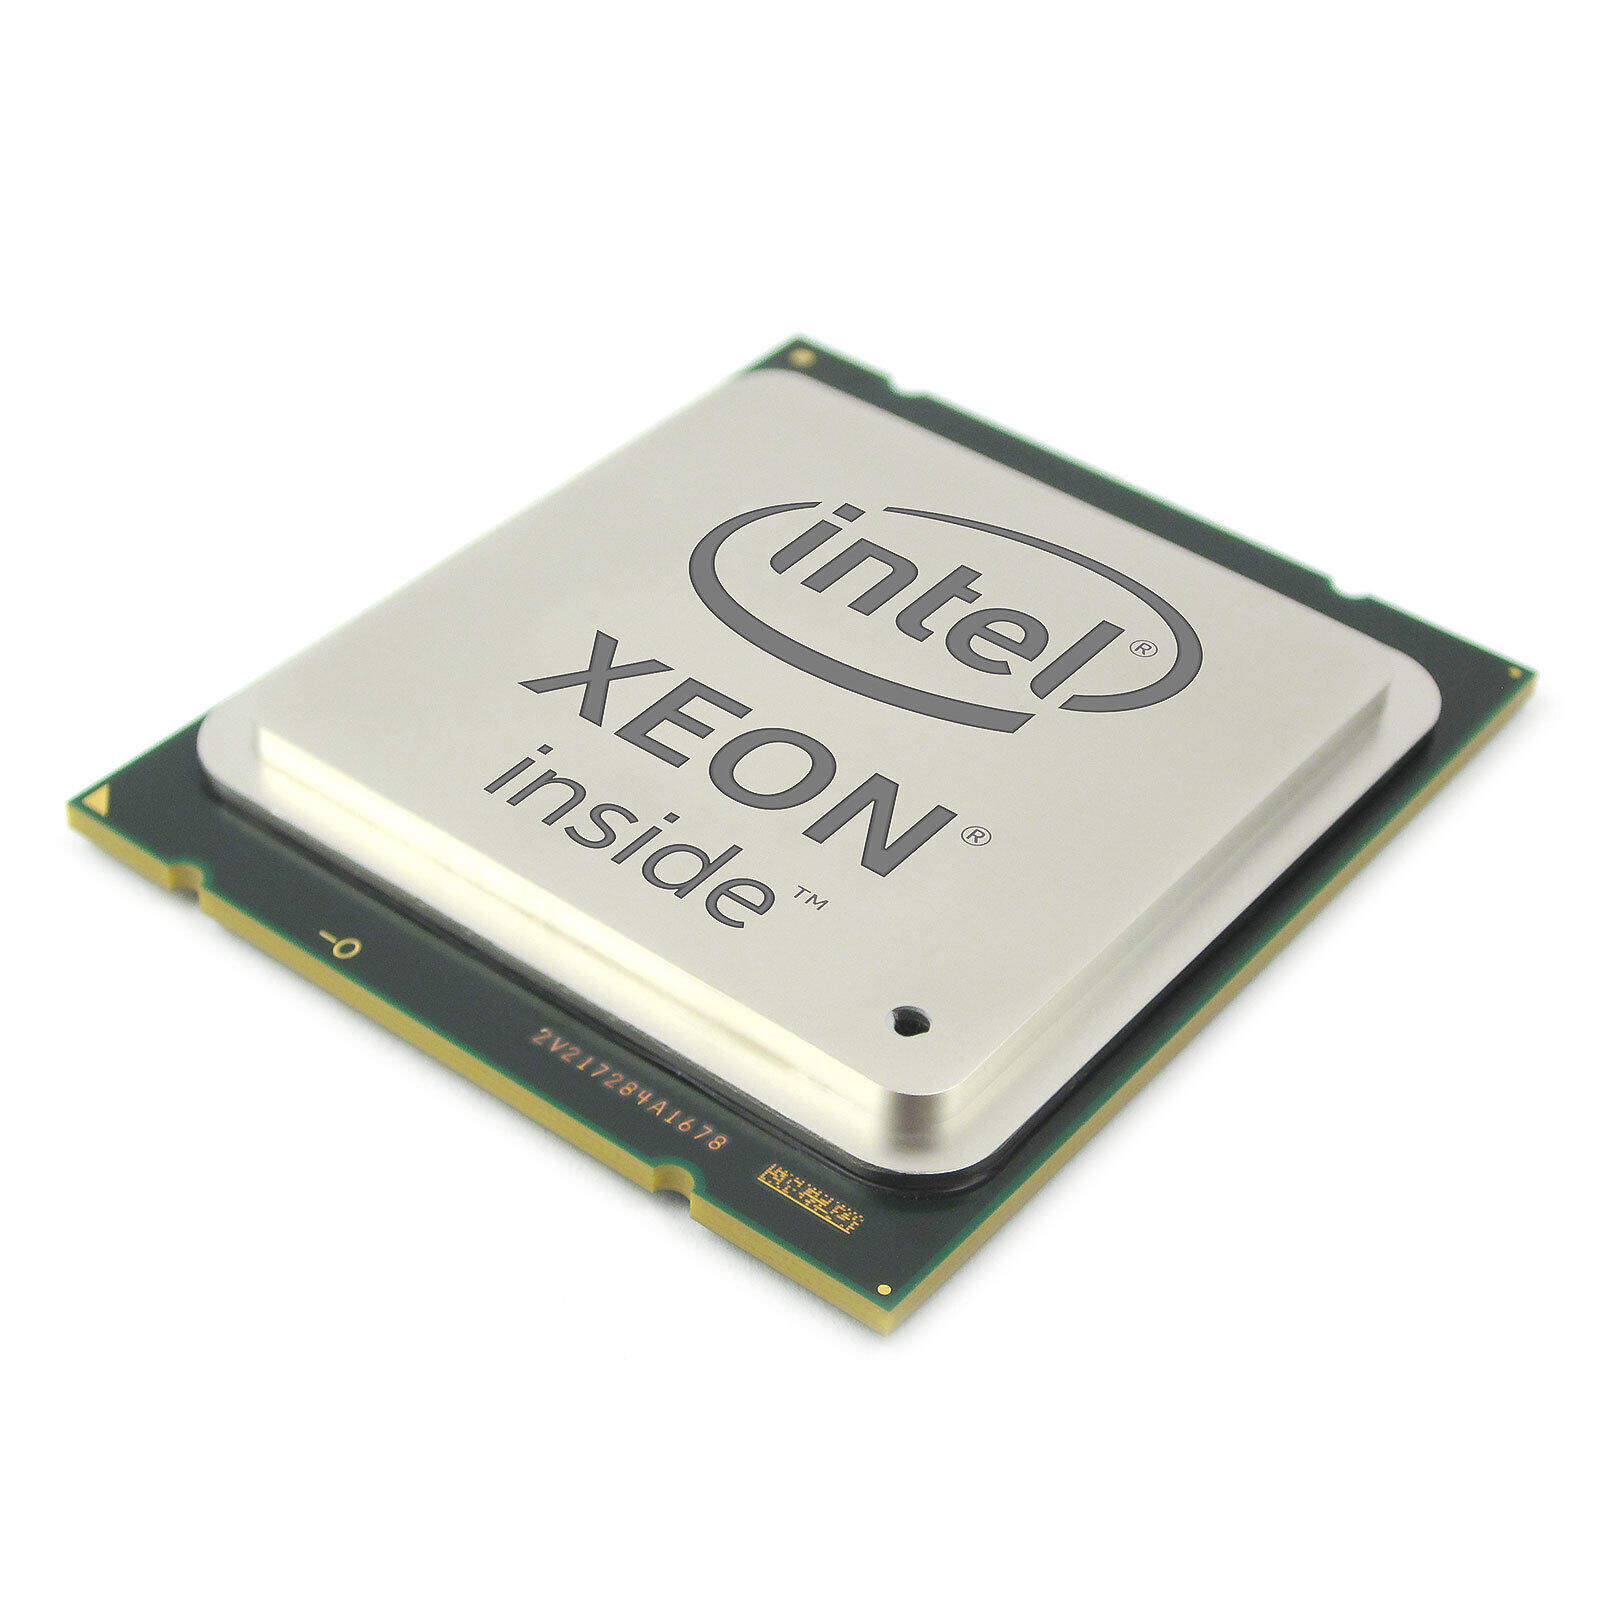 Intel Xeon E5-2430L v2 2.40GHz 6-Core LGA 1356 / Socket B2 Processor SR1B2